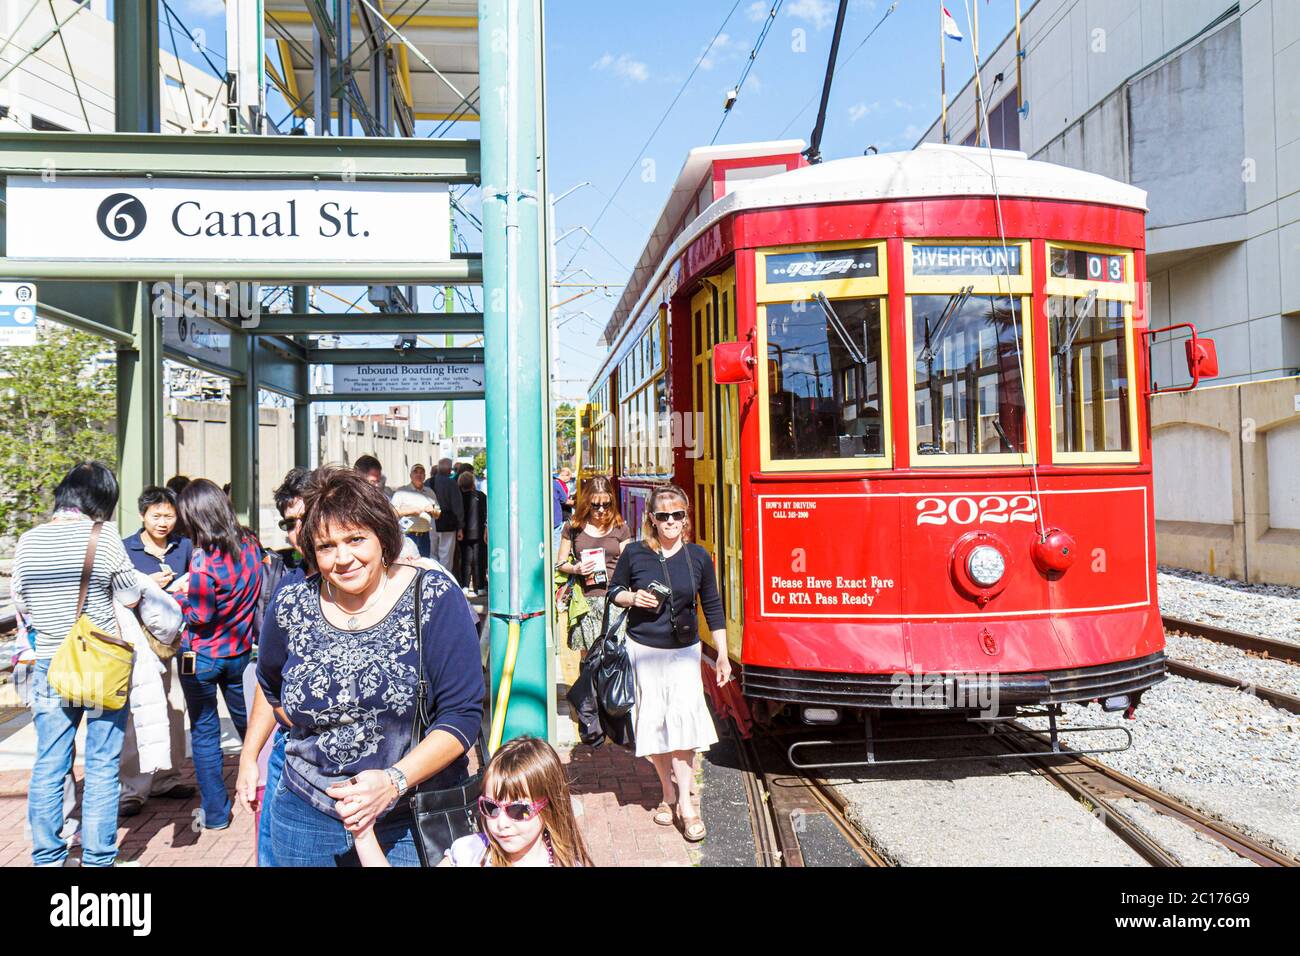 New Orleans Louisiana,Regional Transit Authority,RTA,Riverfront Streetcar Line,Canal Street Station,tram,trolley,stop,passenger passengers rider rider Stock Photo